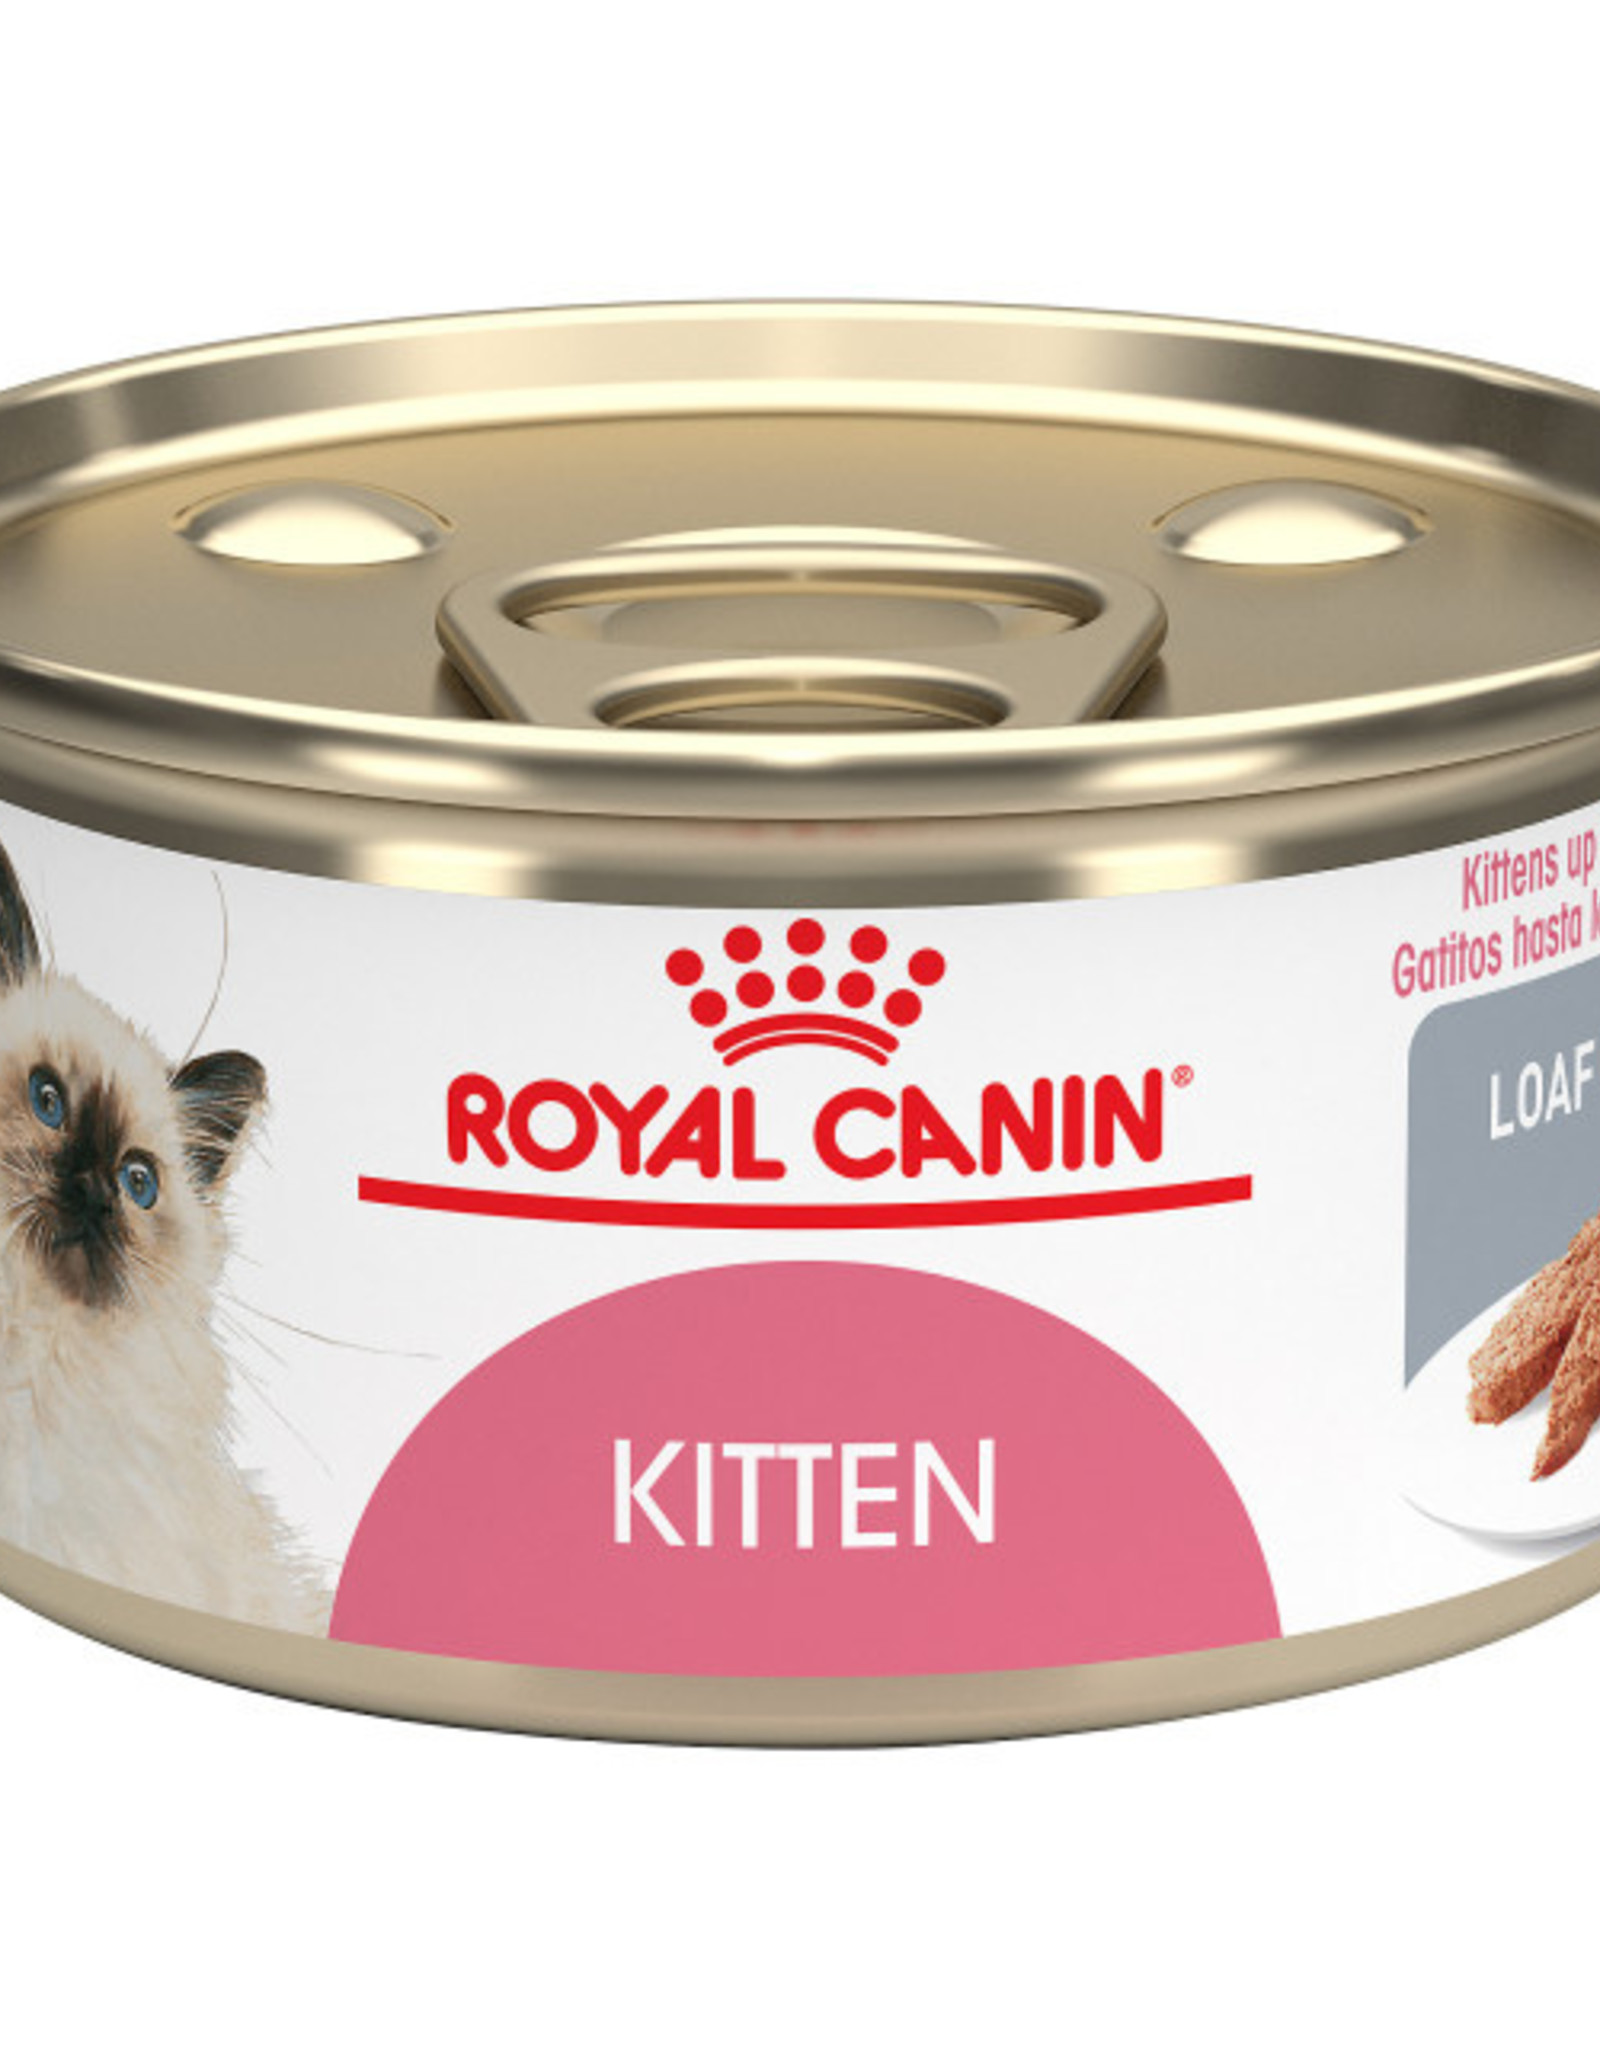 ROYAL CANIN ROYAL CANIN CAT CAN KITTEN 3OZ CASE OF 24